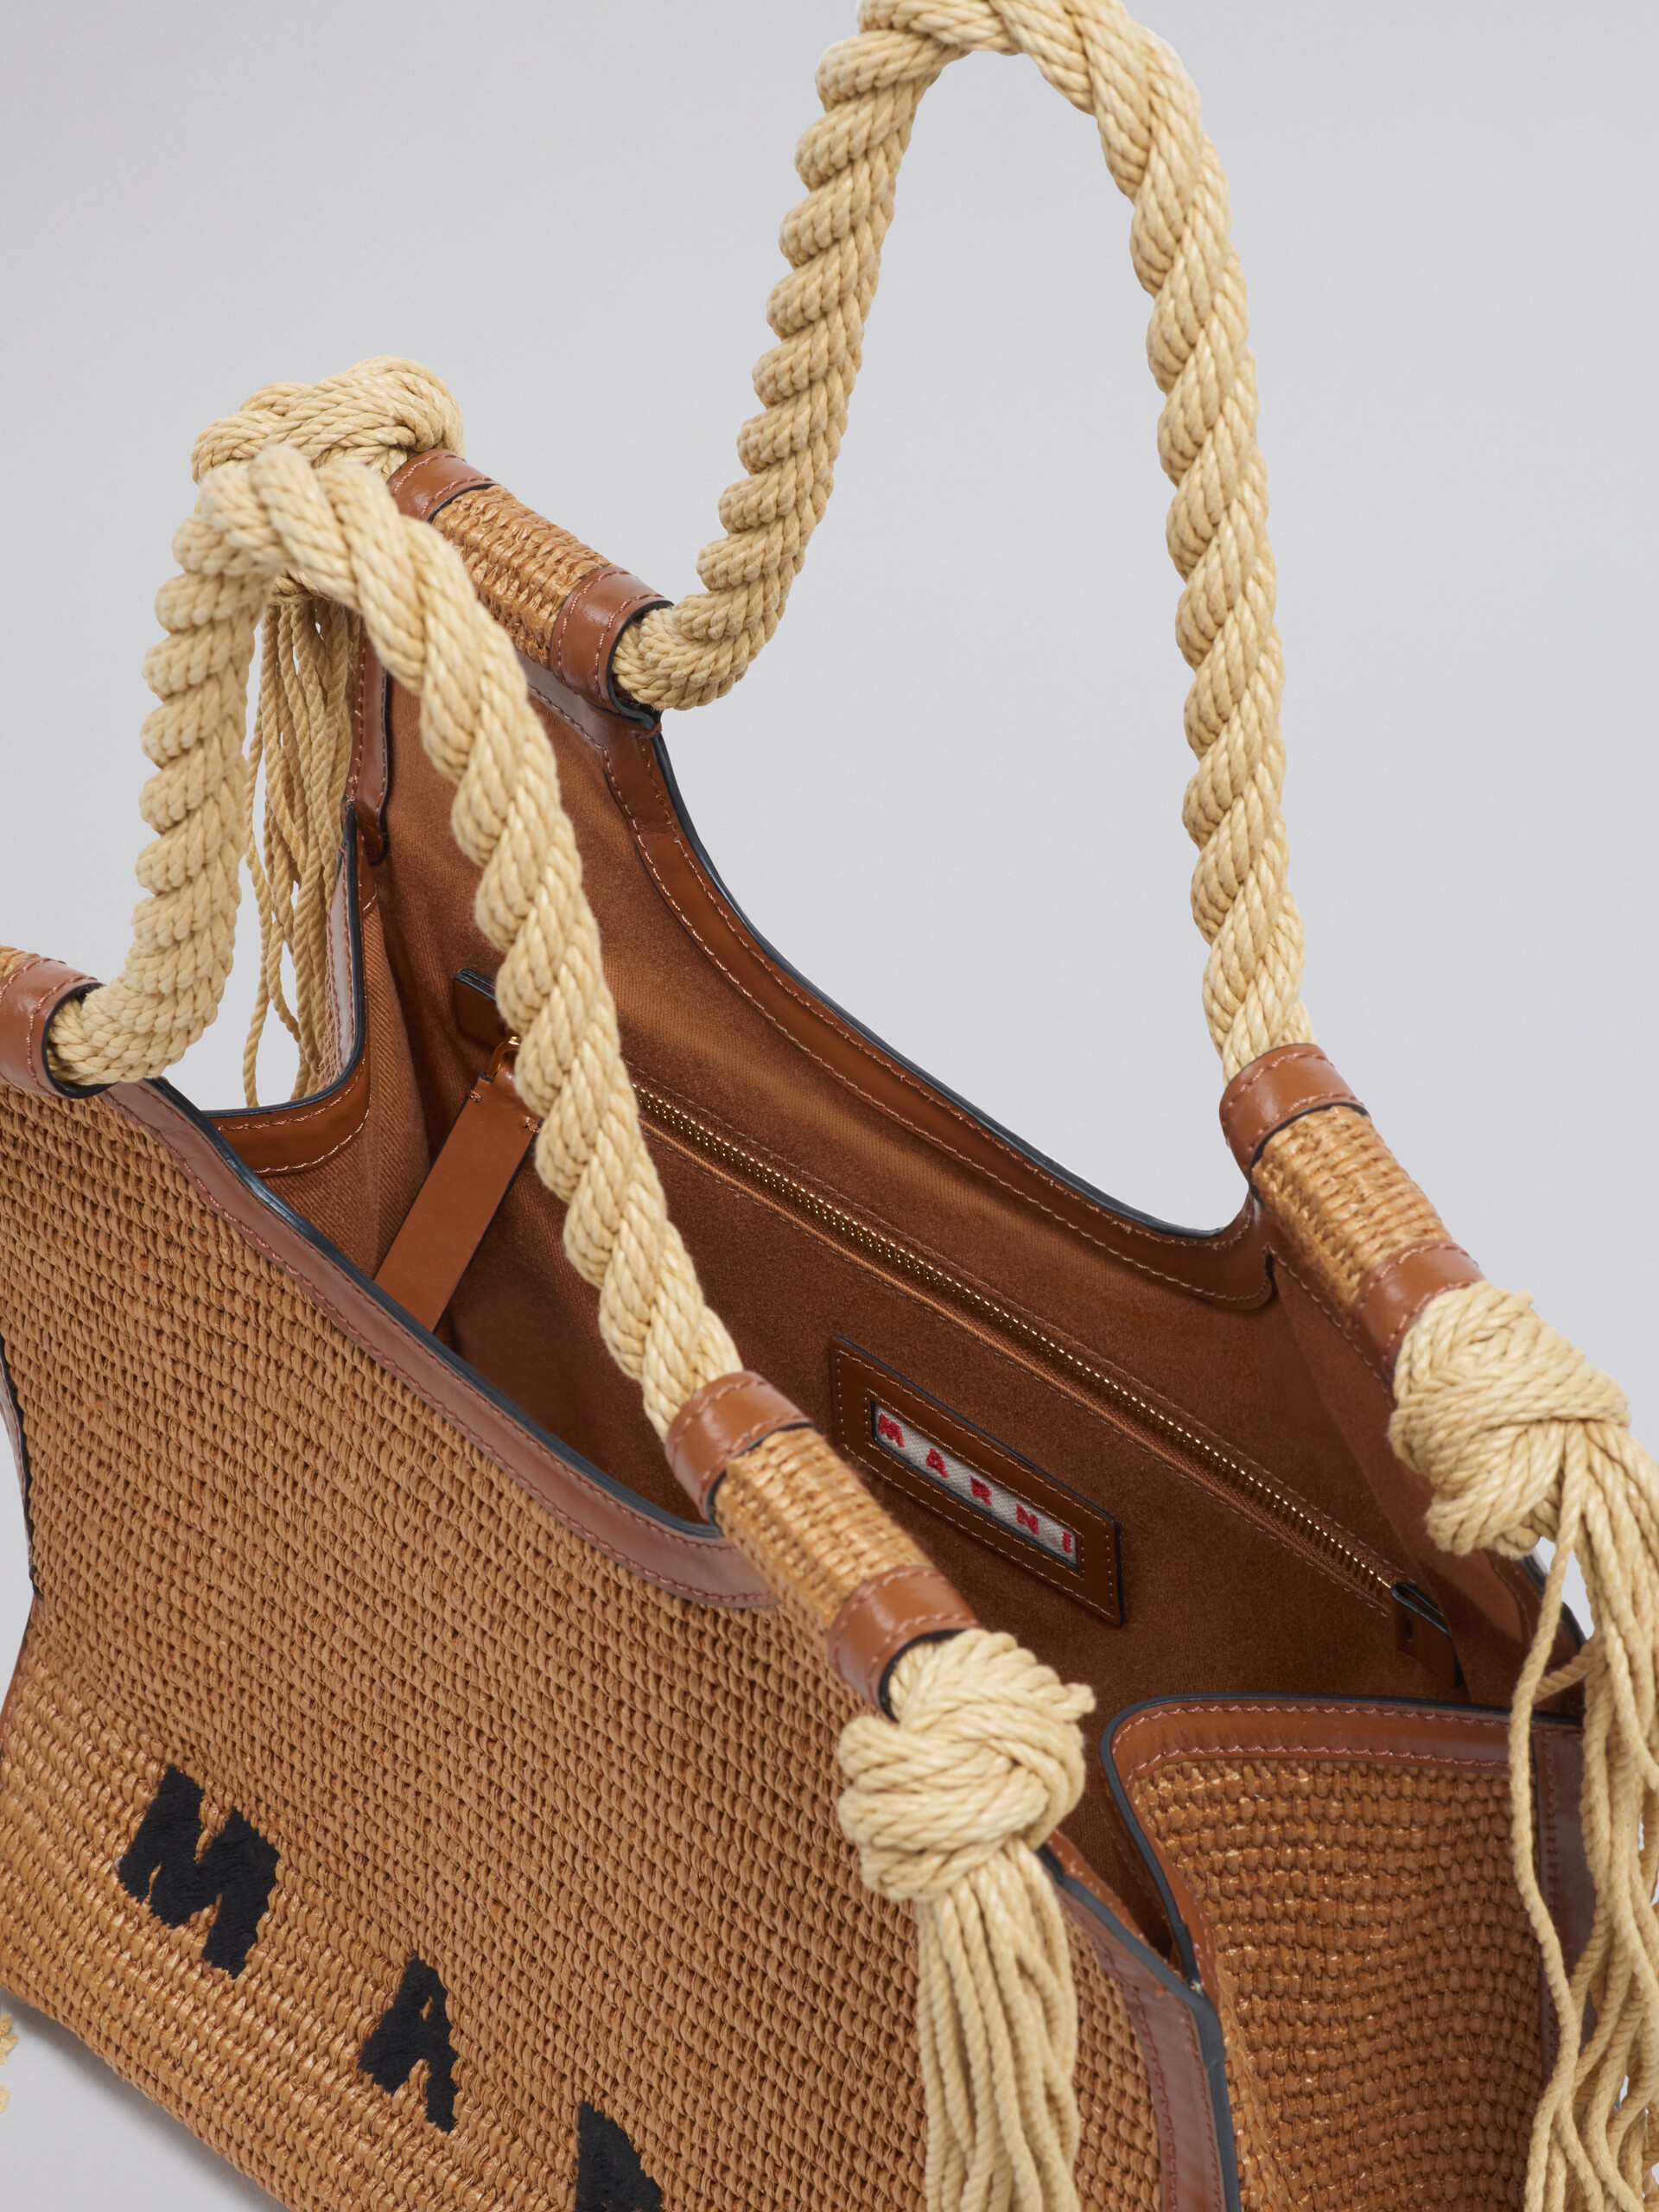 Marcel Summer Bag with rope handles - Handbags - Image 4